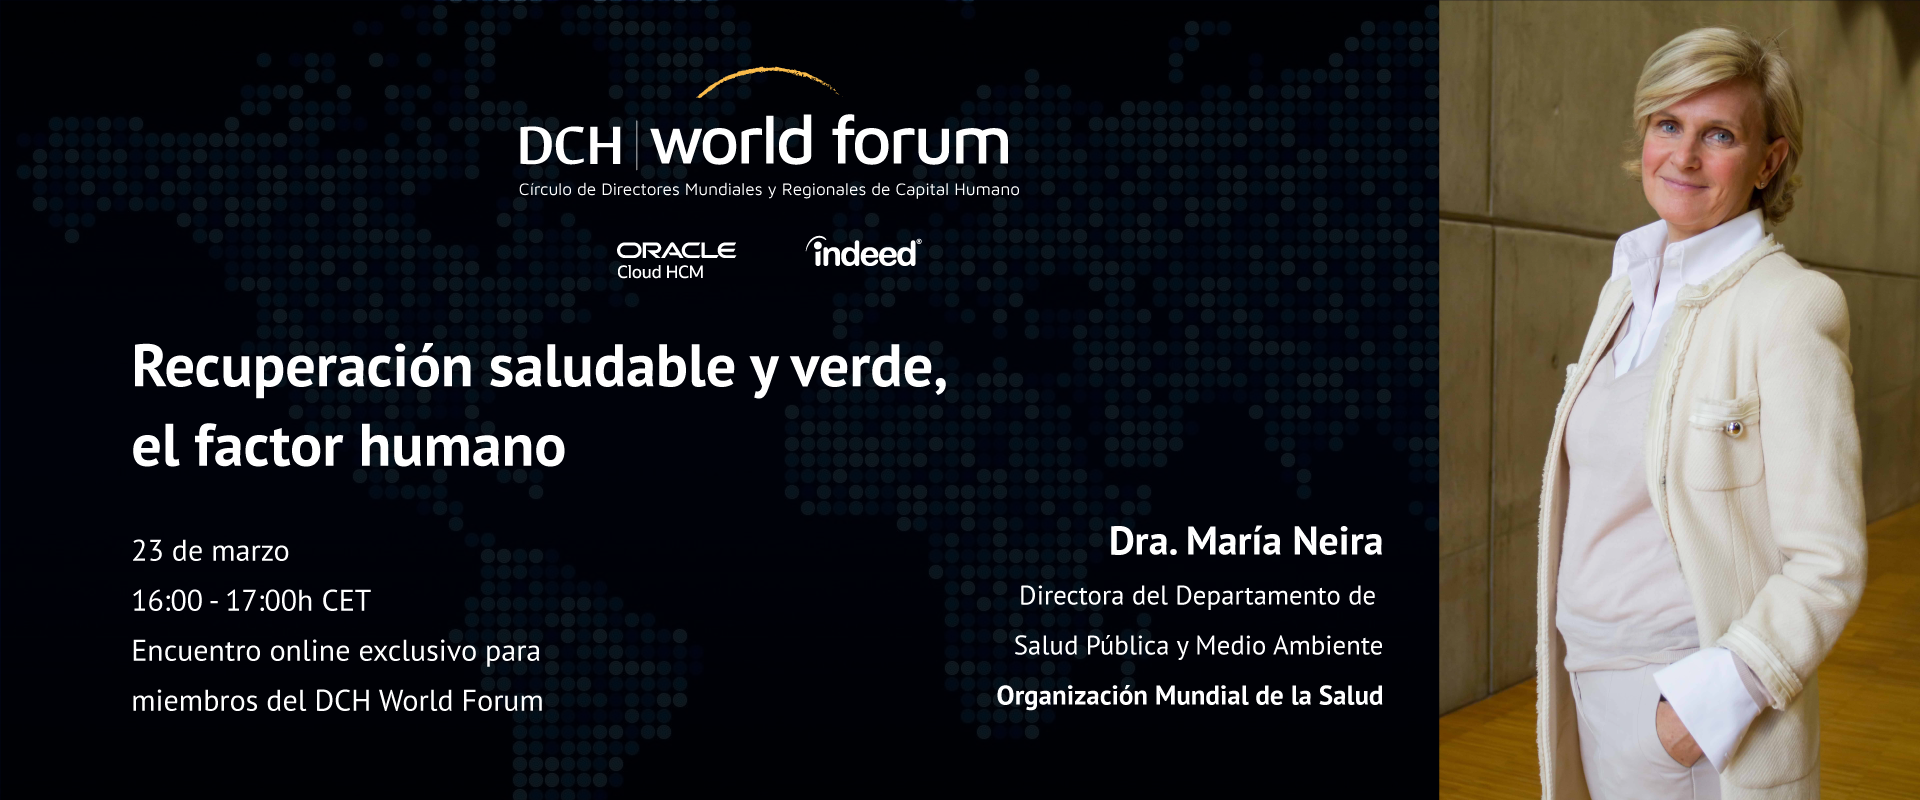 xdch world forum